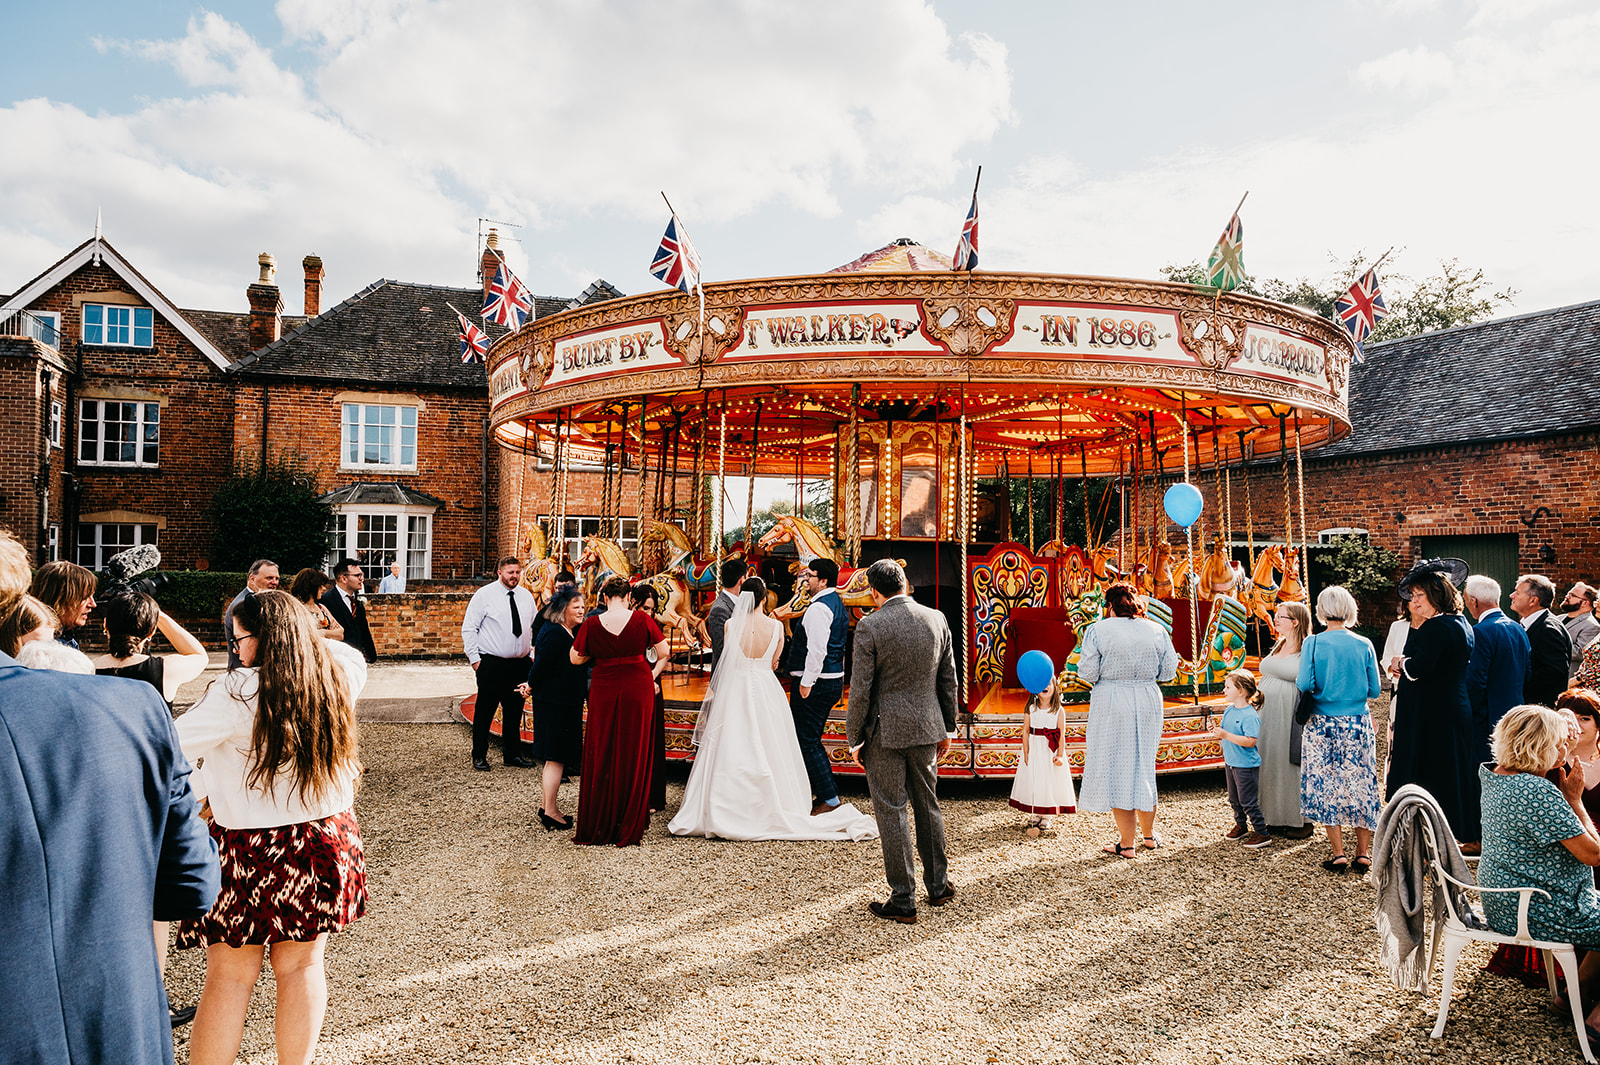 fairground carousel for wedding reception